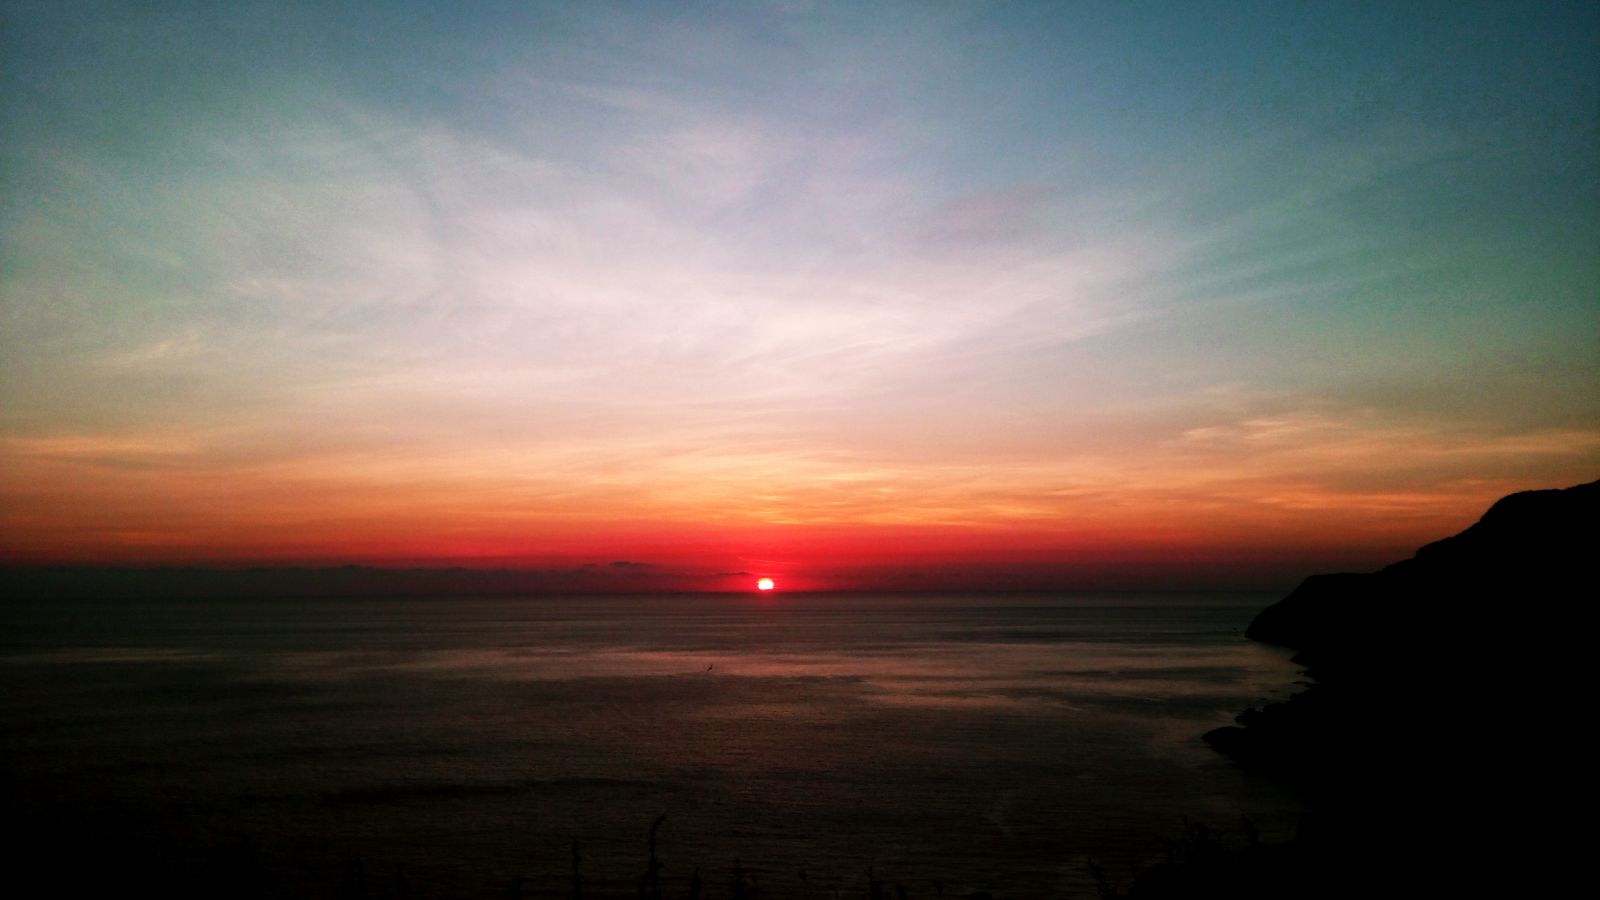 Sunrise at Cham Island